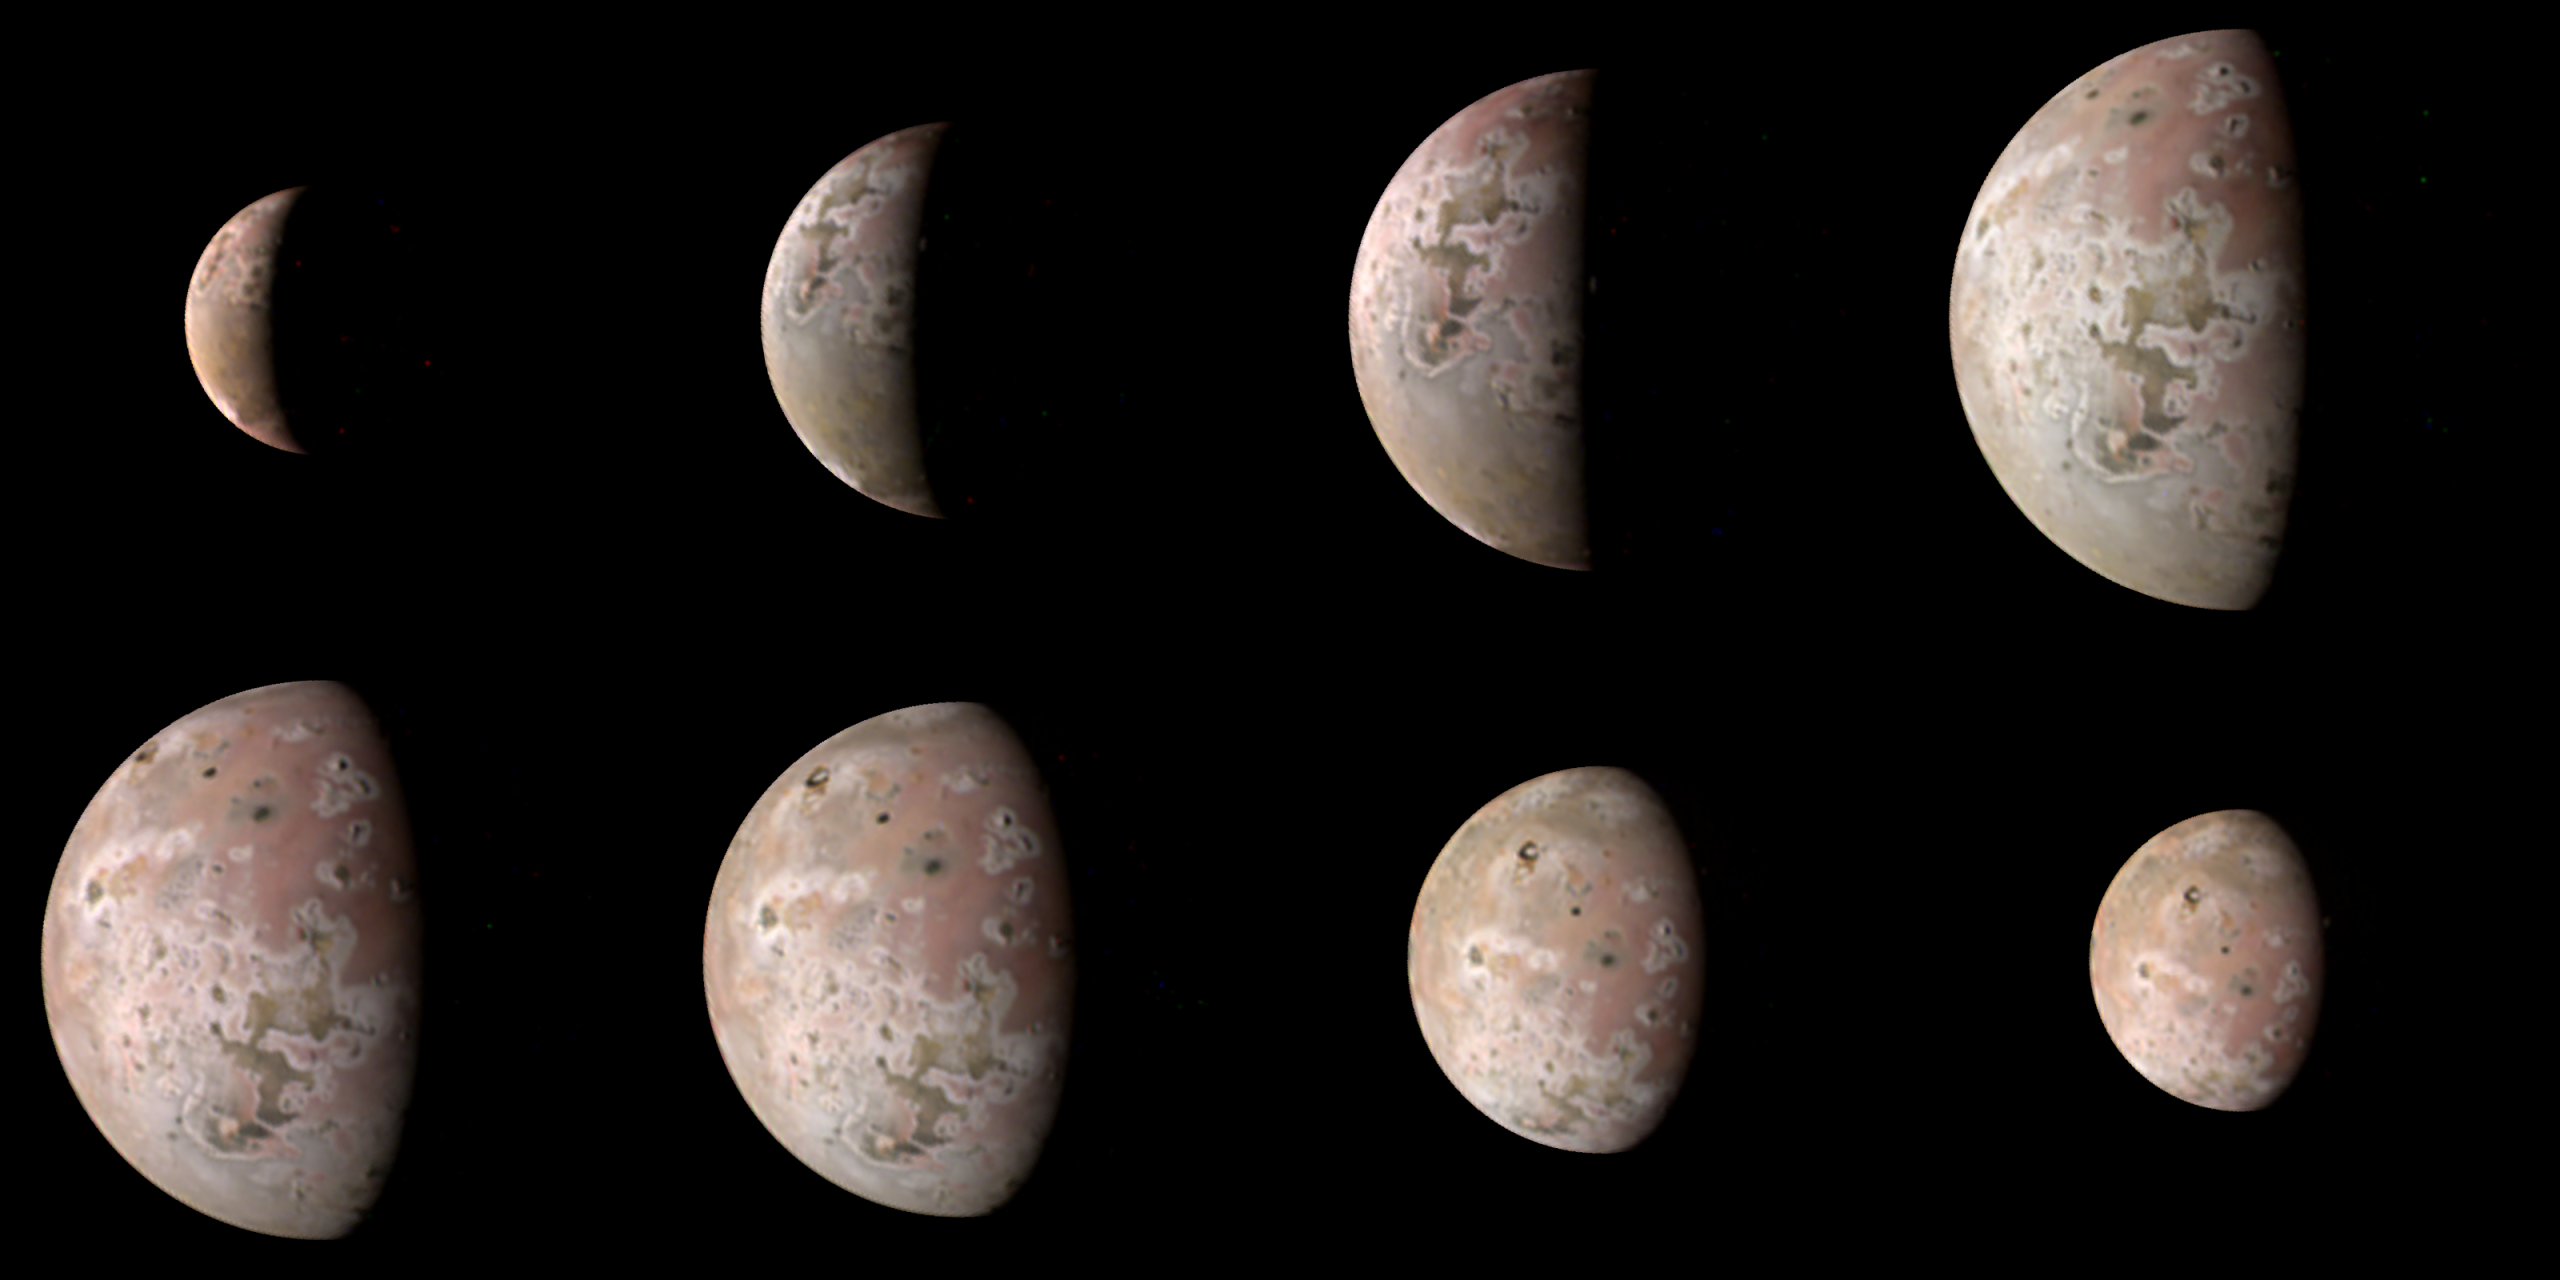 Juno mission image of Io